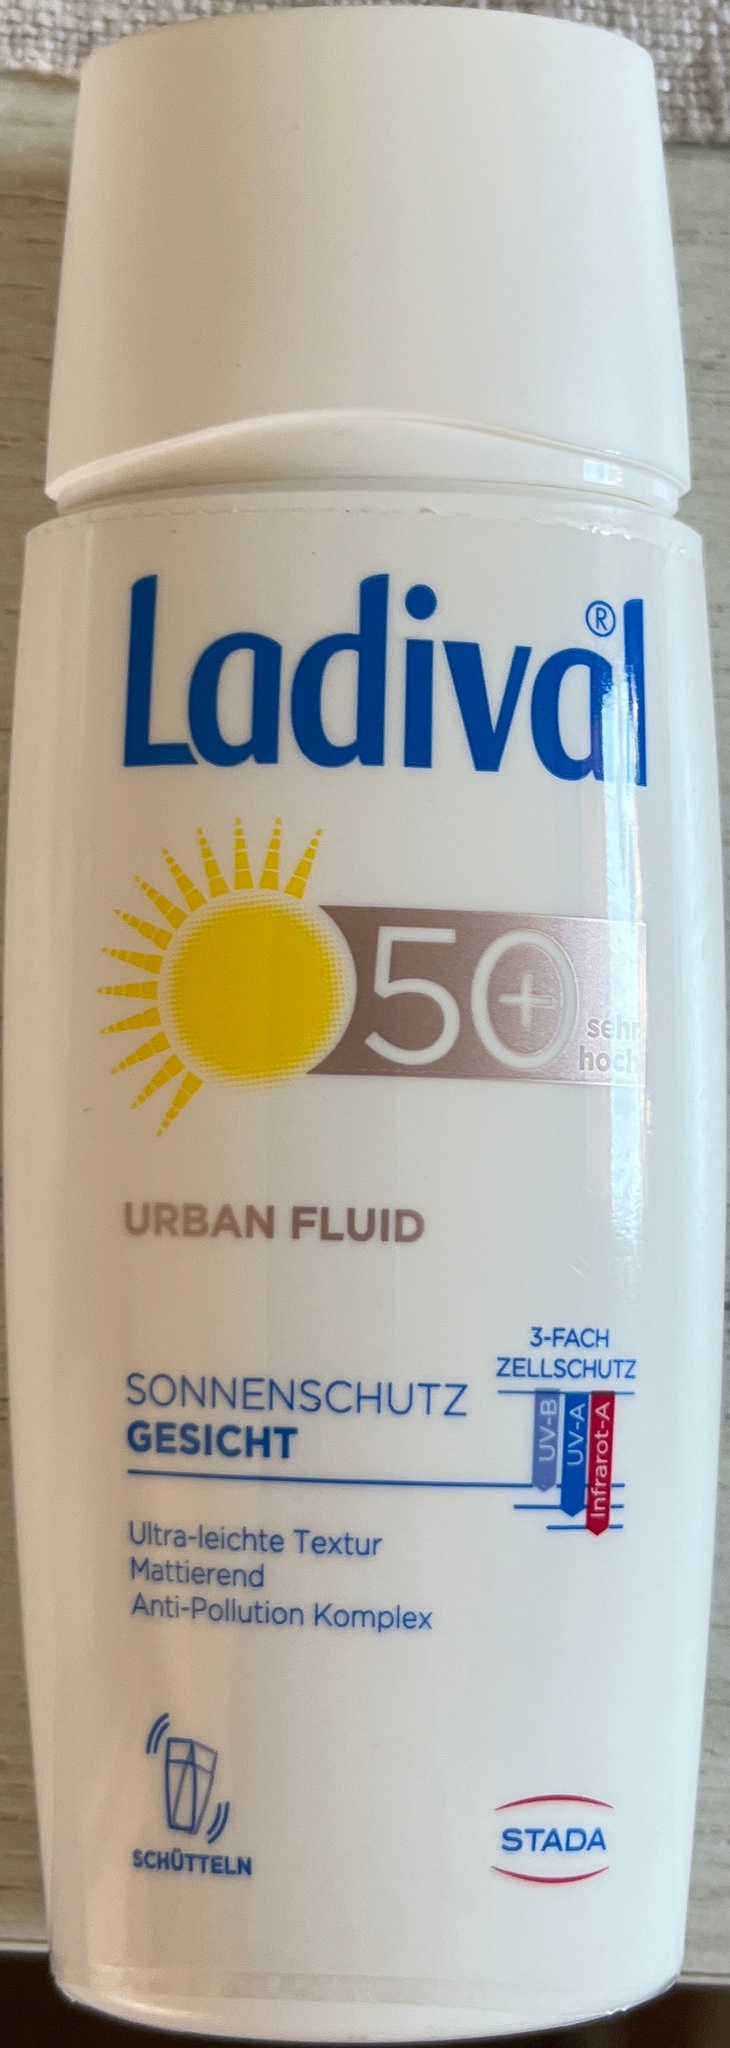 Ladival Urban Fluid 50+